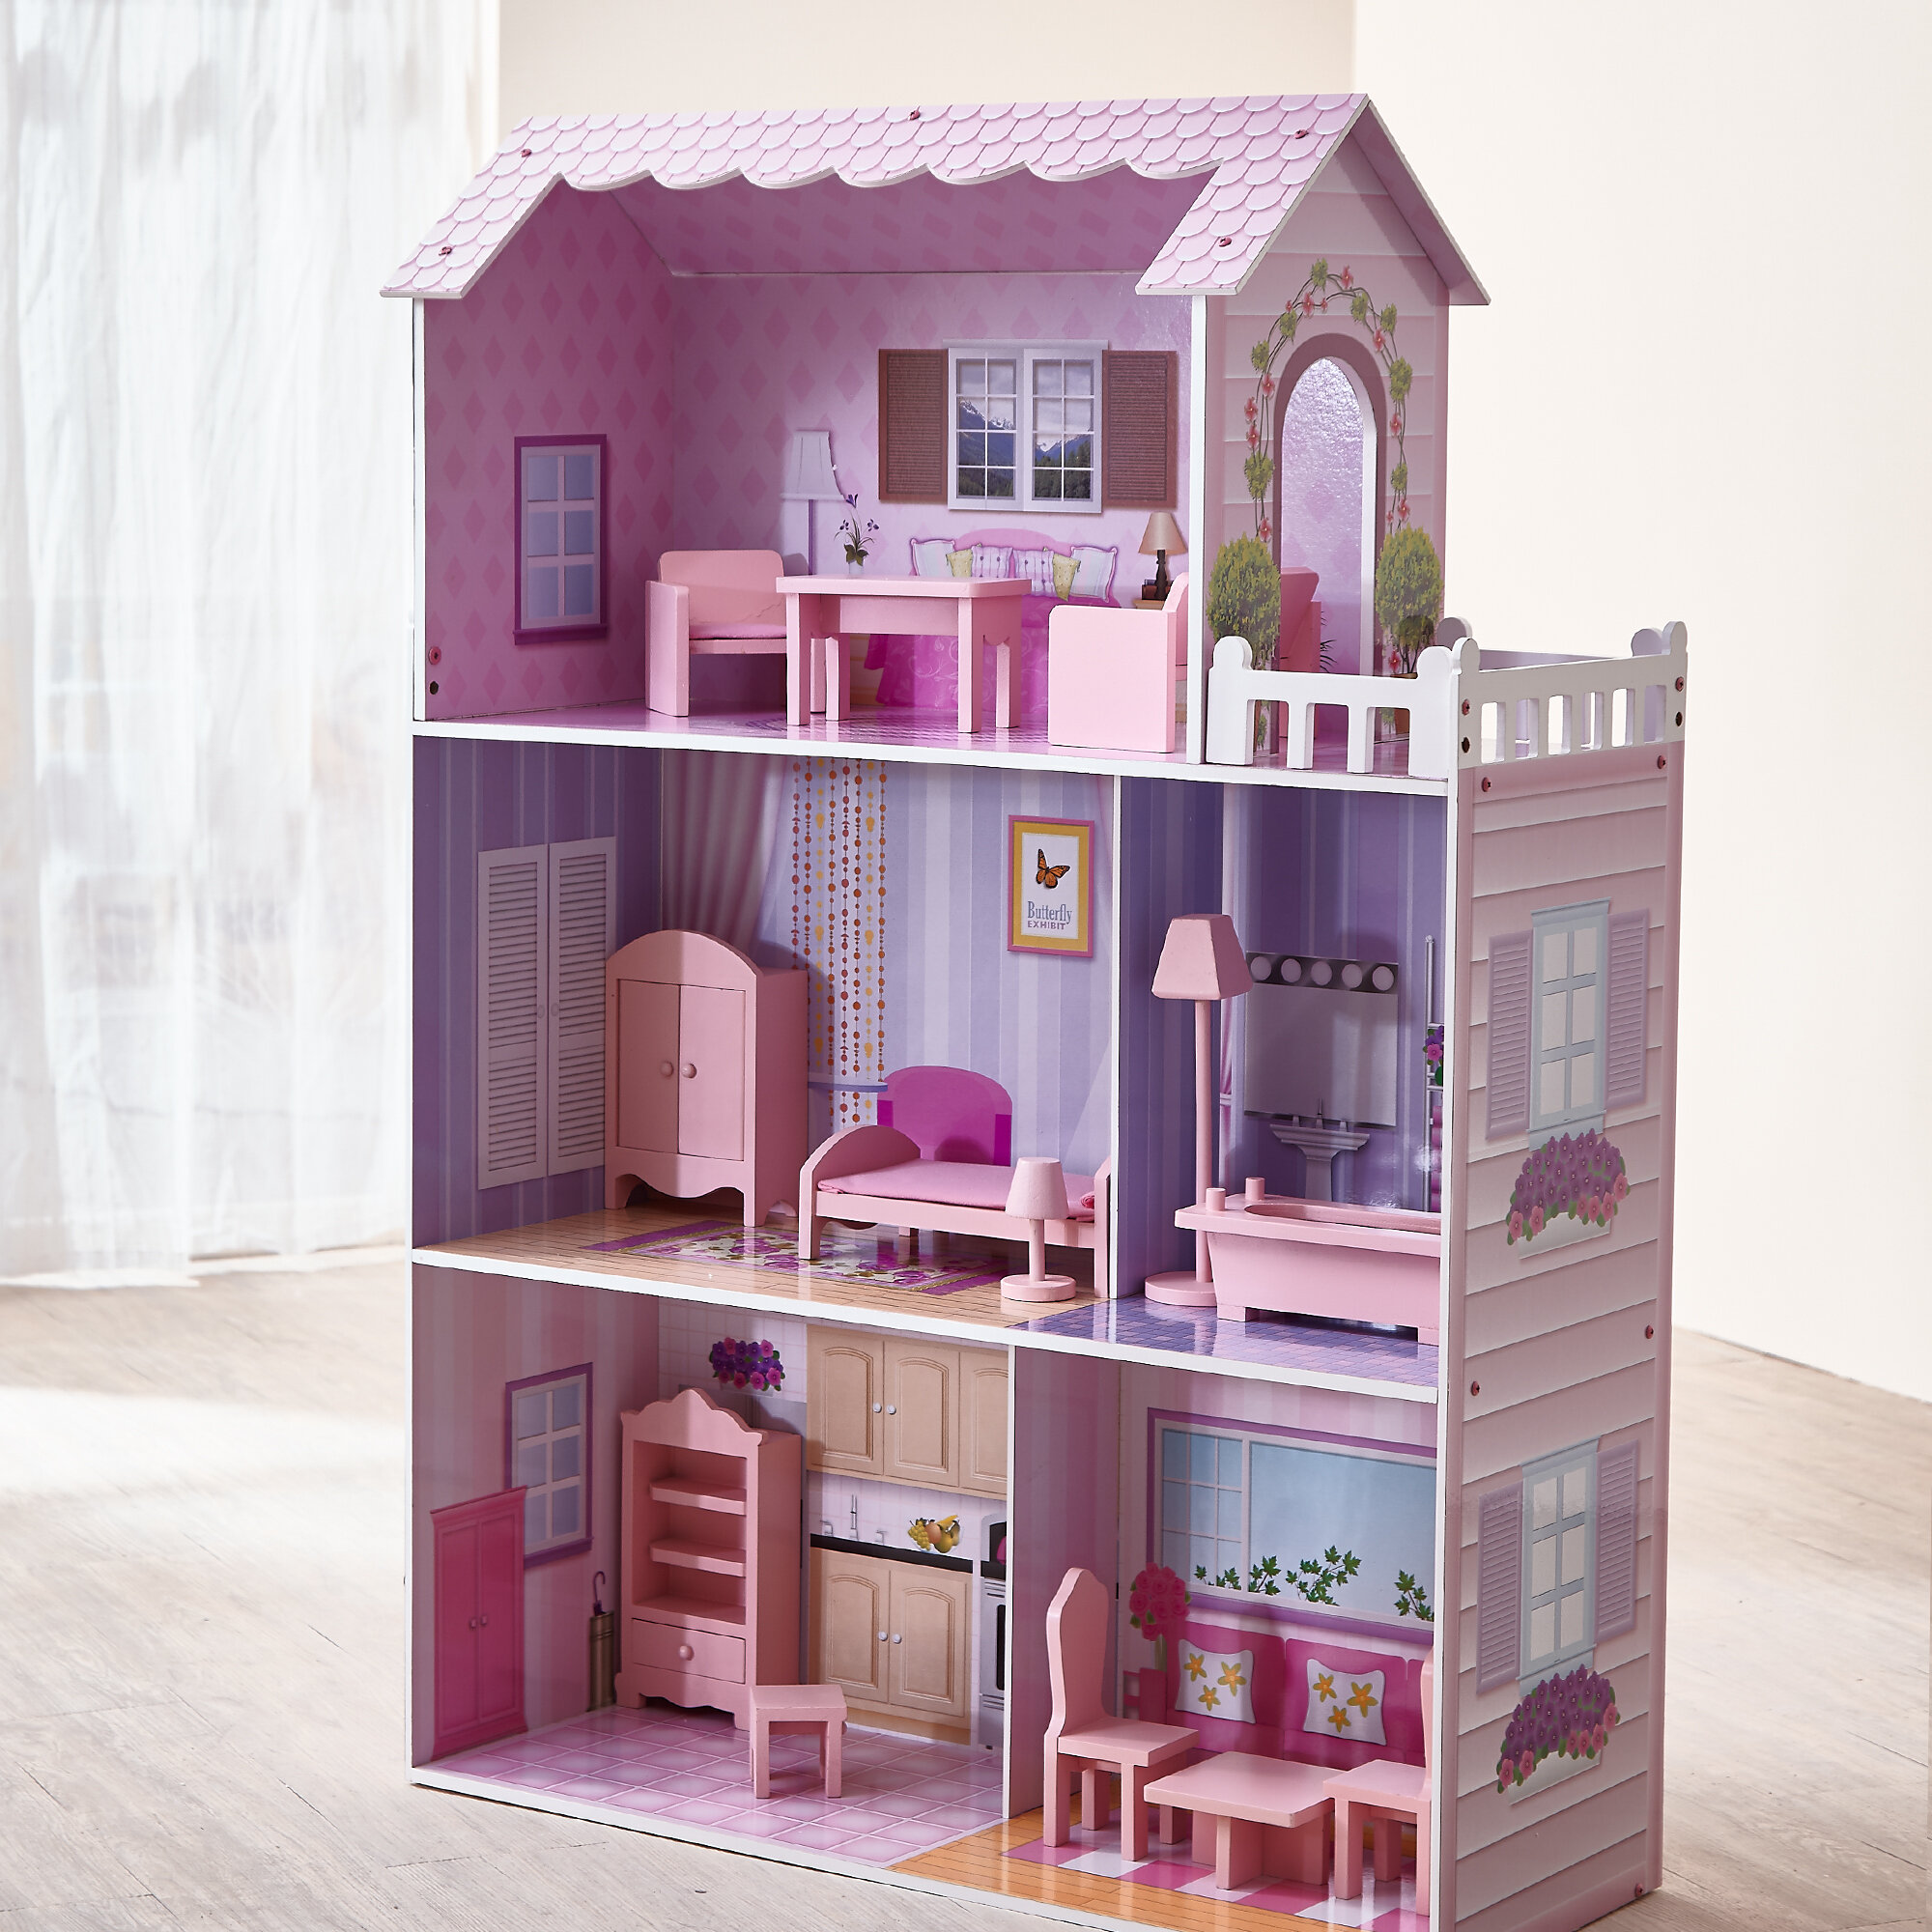 BananMelonBM 50psc dollhouse Children's Toy Furniture And Figures Kids Fun Games 